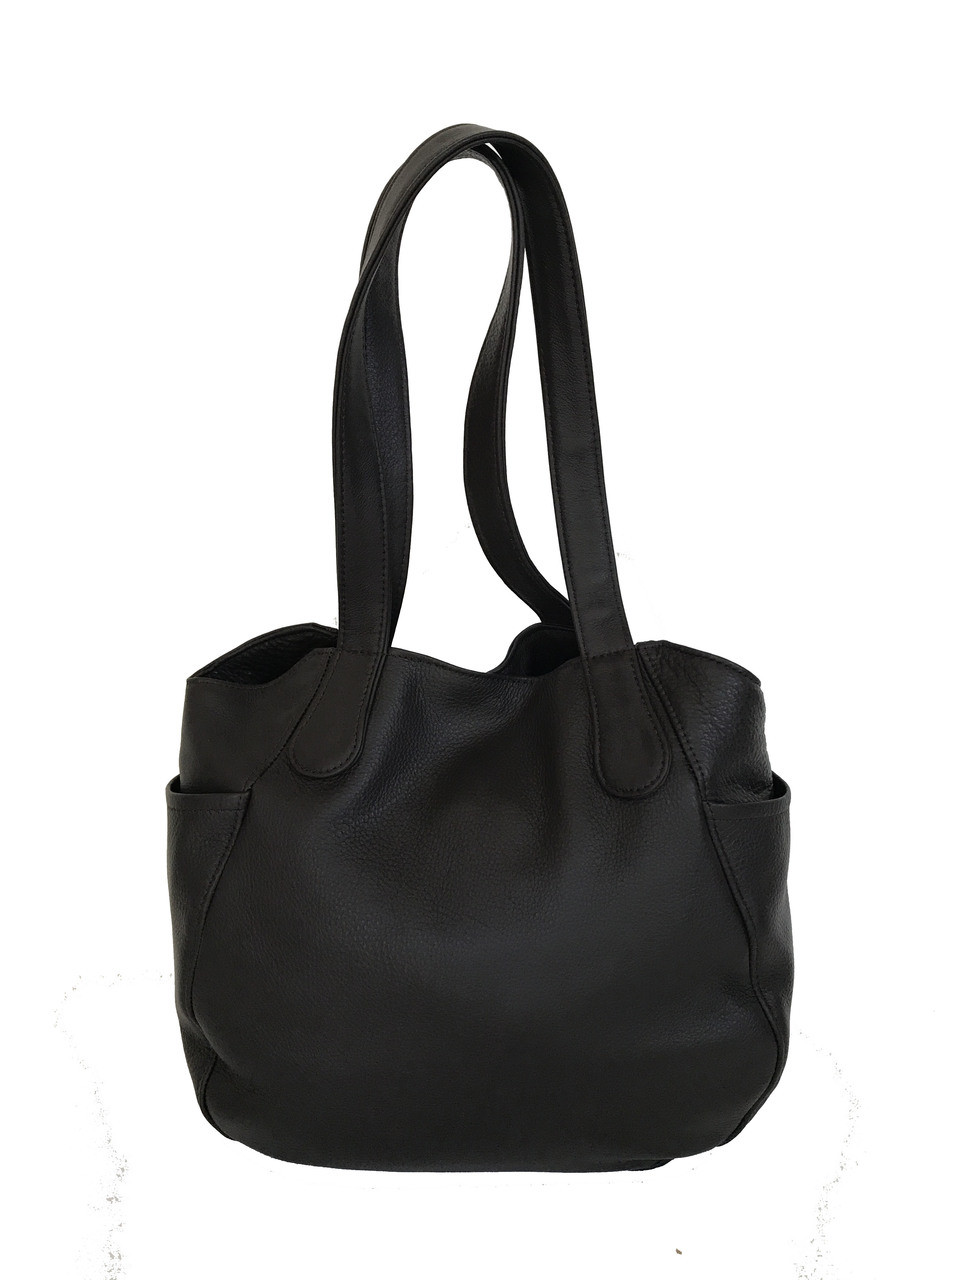 Brown Leather Bag, Fashion Shoulder Handbag, Casual Everyday Purse ...